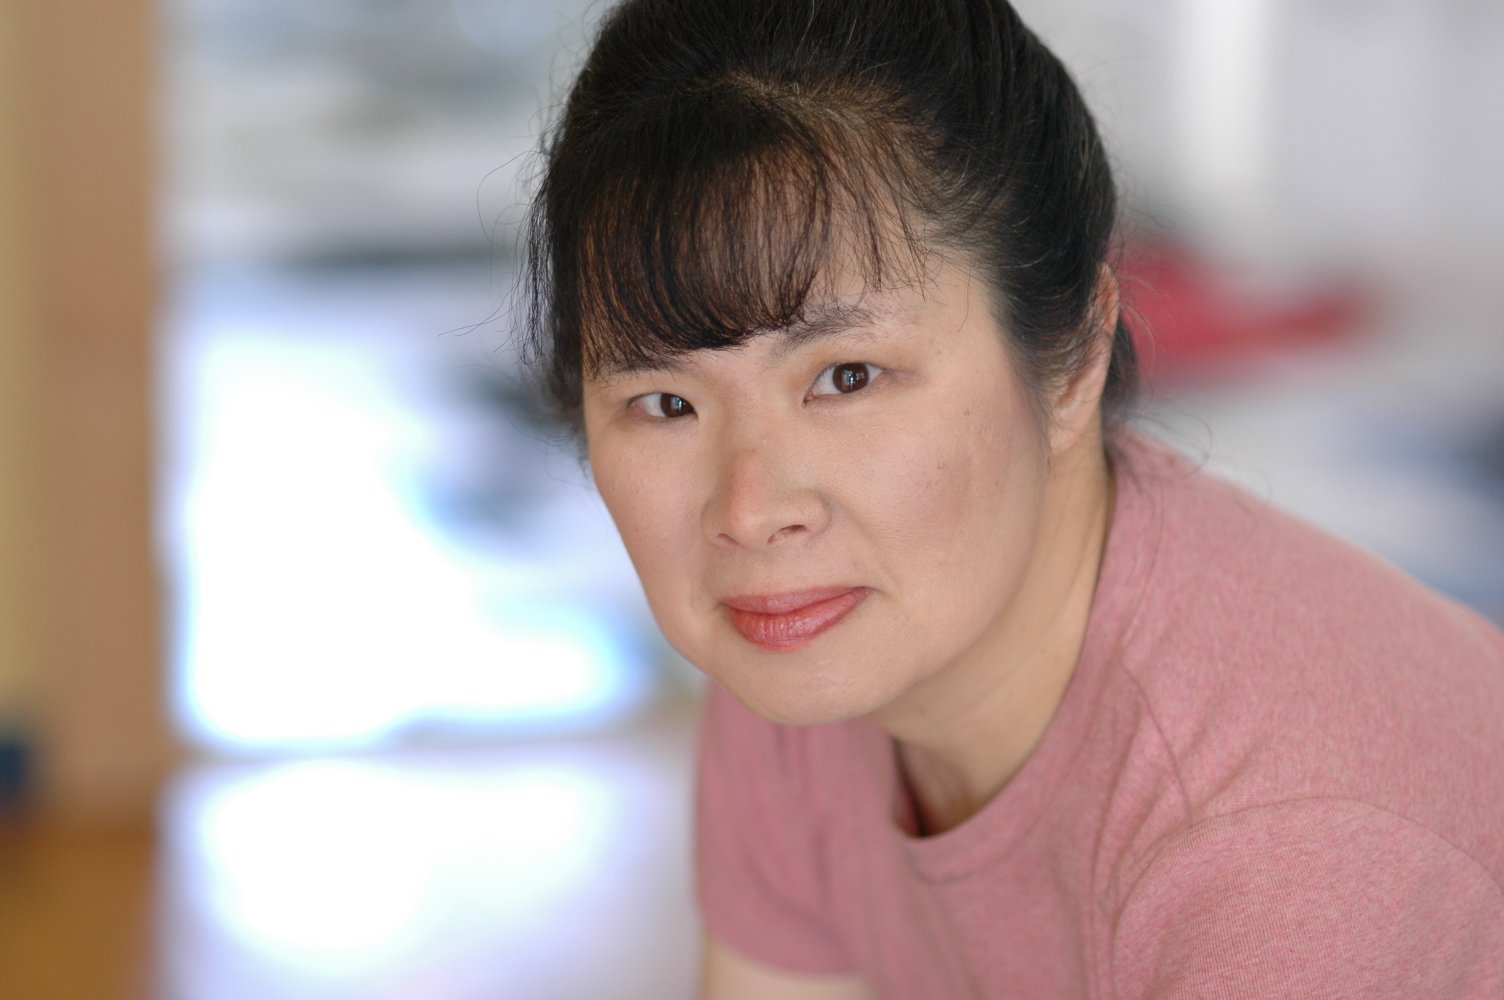 Cathy Chang